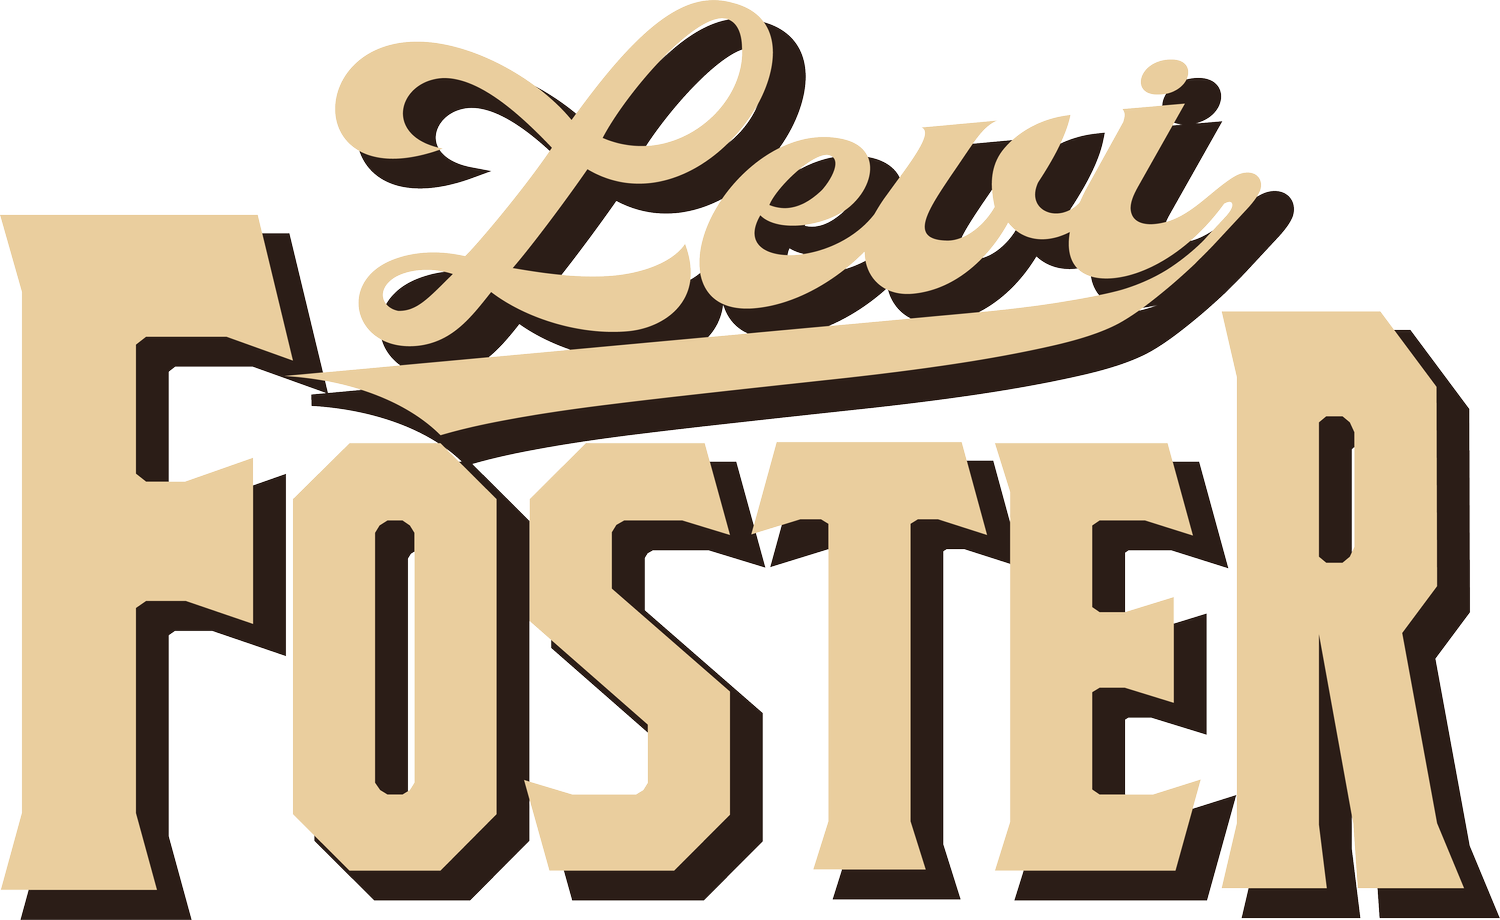 Levi Foster